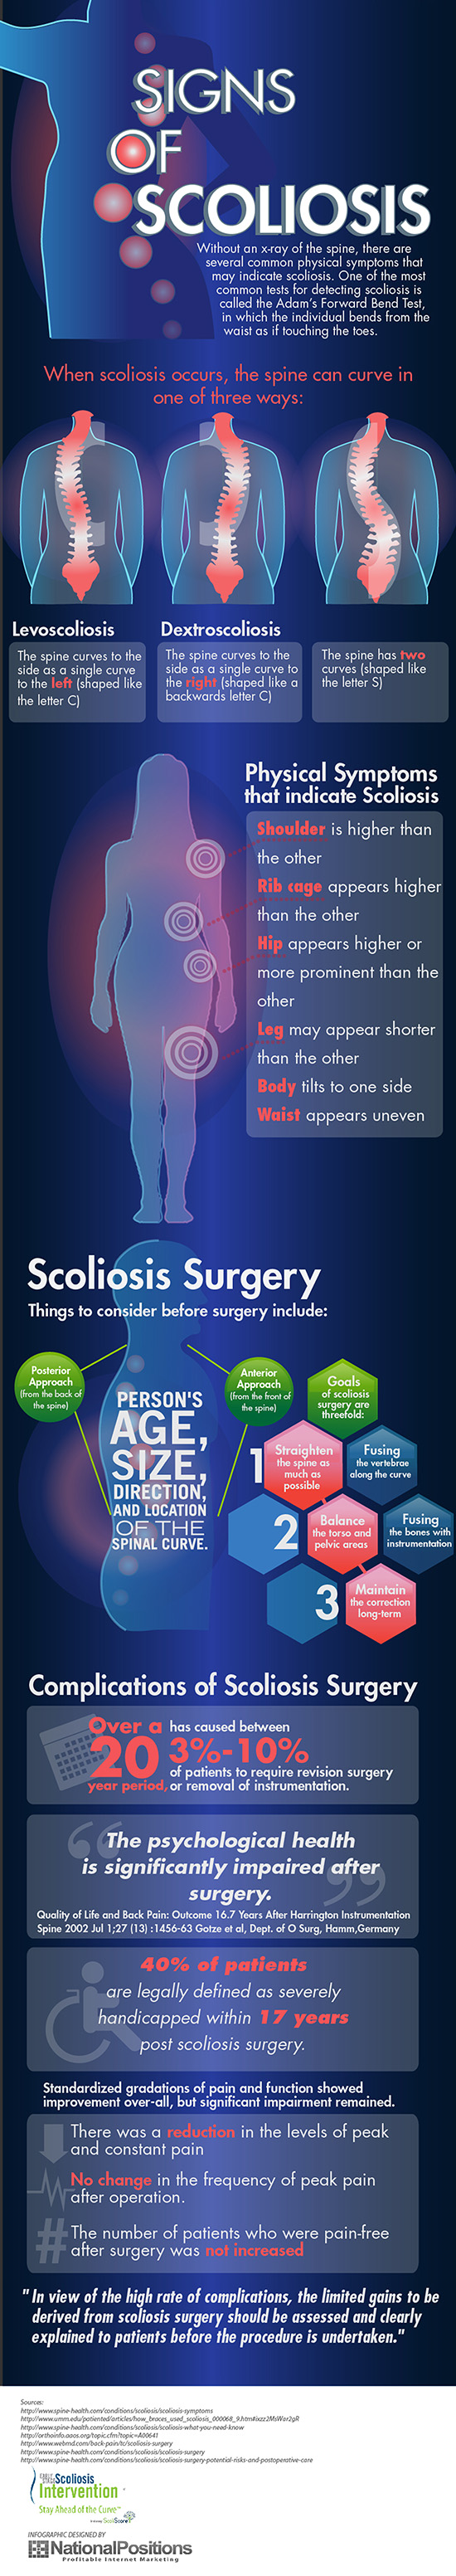 Symptoms of Scoliosis